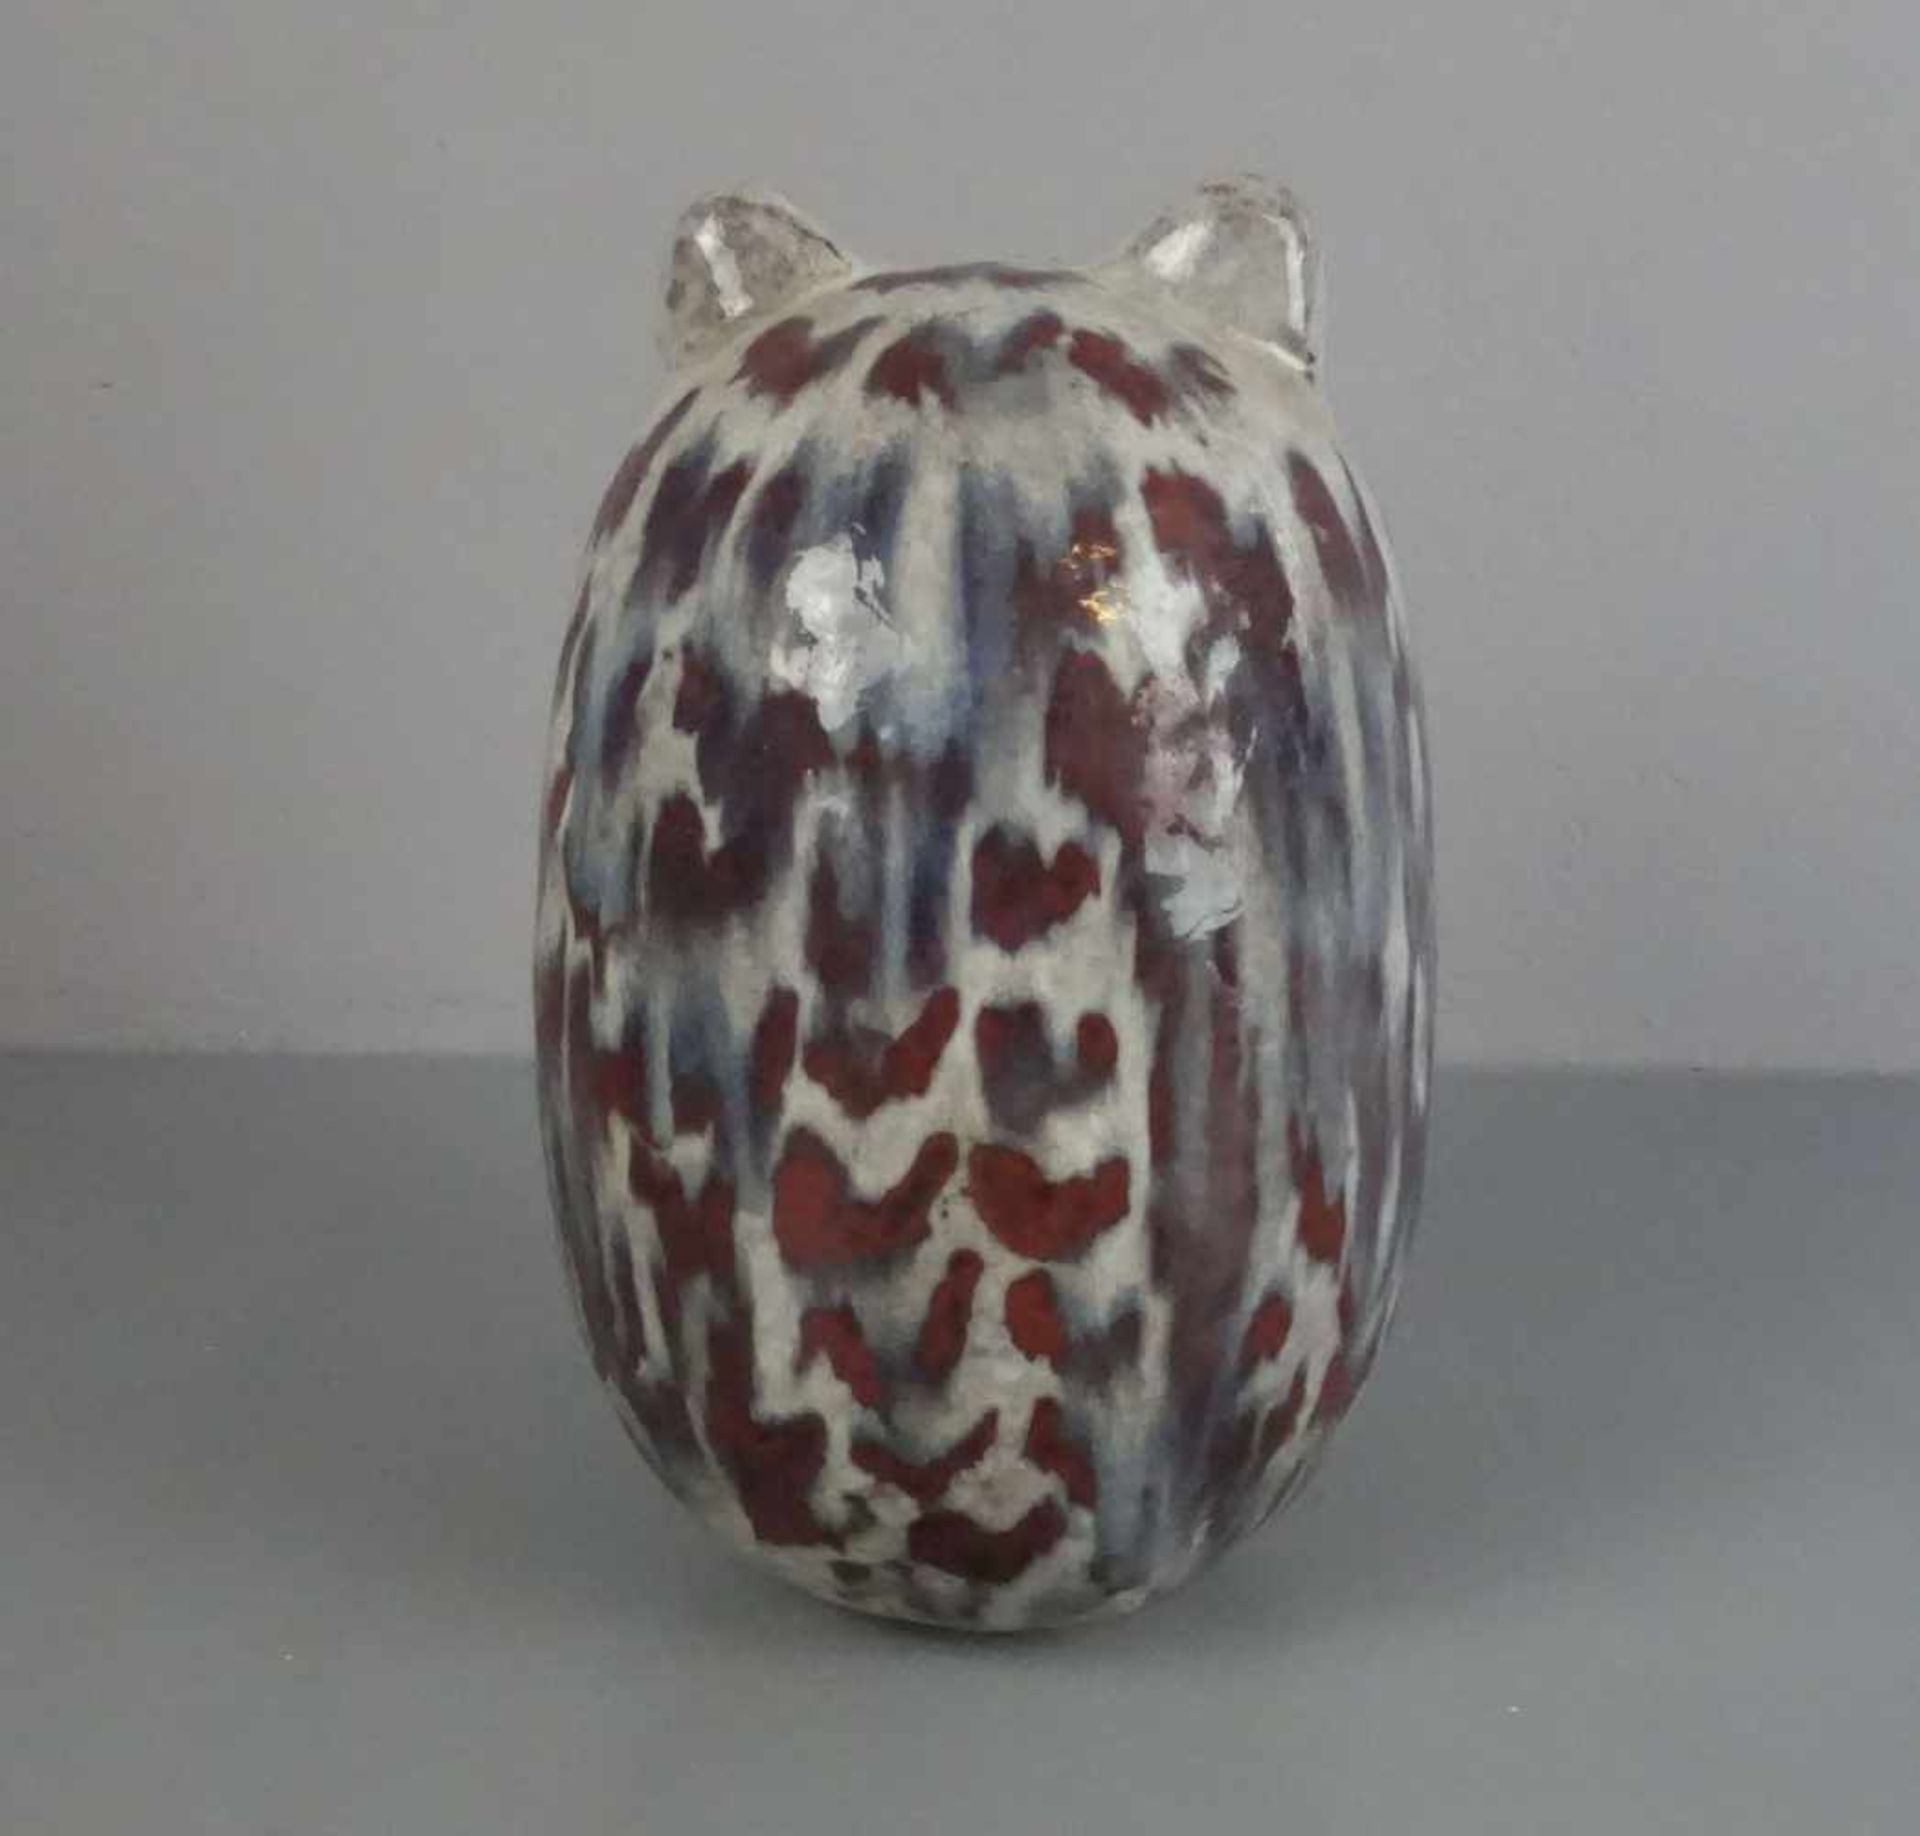 KÜNSTLERKERAMIK / SKULPTUR: "Eule" / owl pottery sculpture, Mitte 20. Jh., Studiokeramik, - Bild 3 aus 4